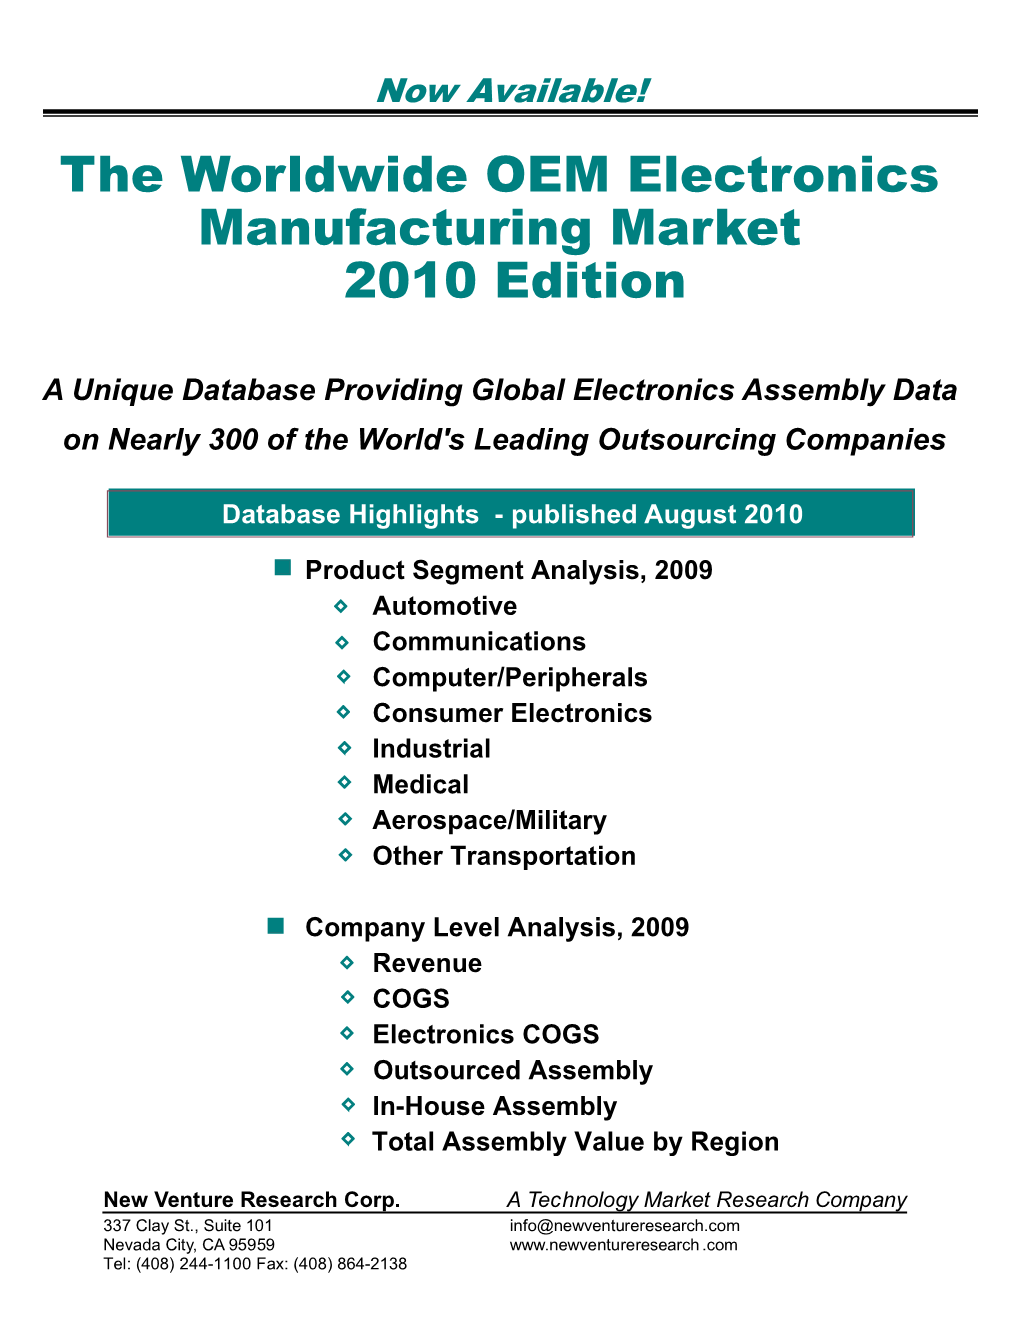 The Worldwide OEM Electronics Manufacturing Market 2010 Edition